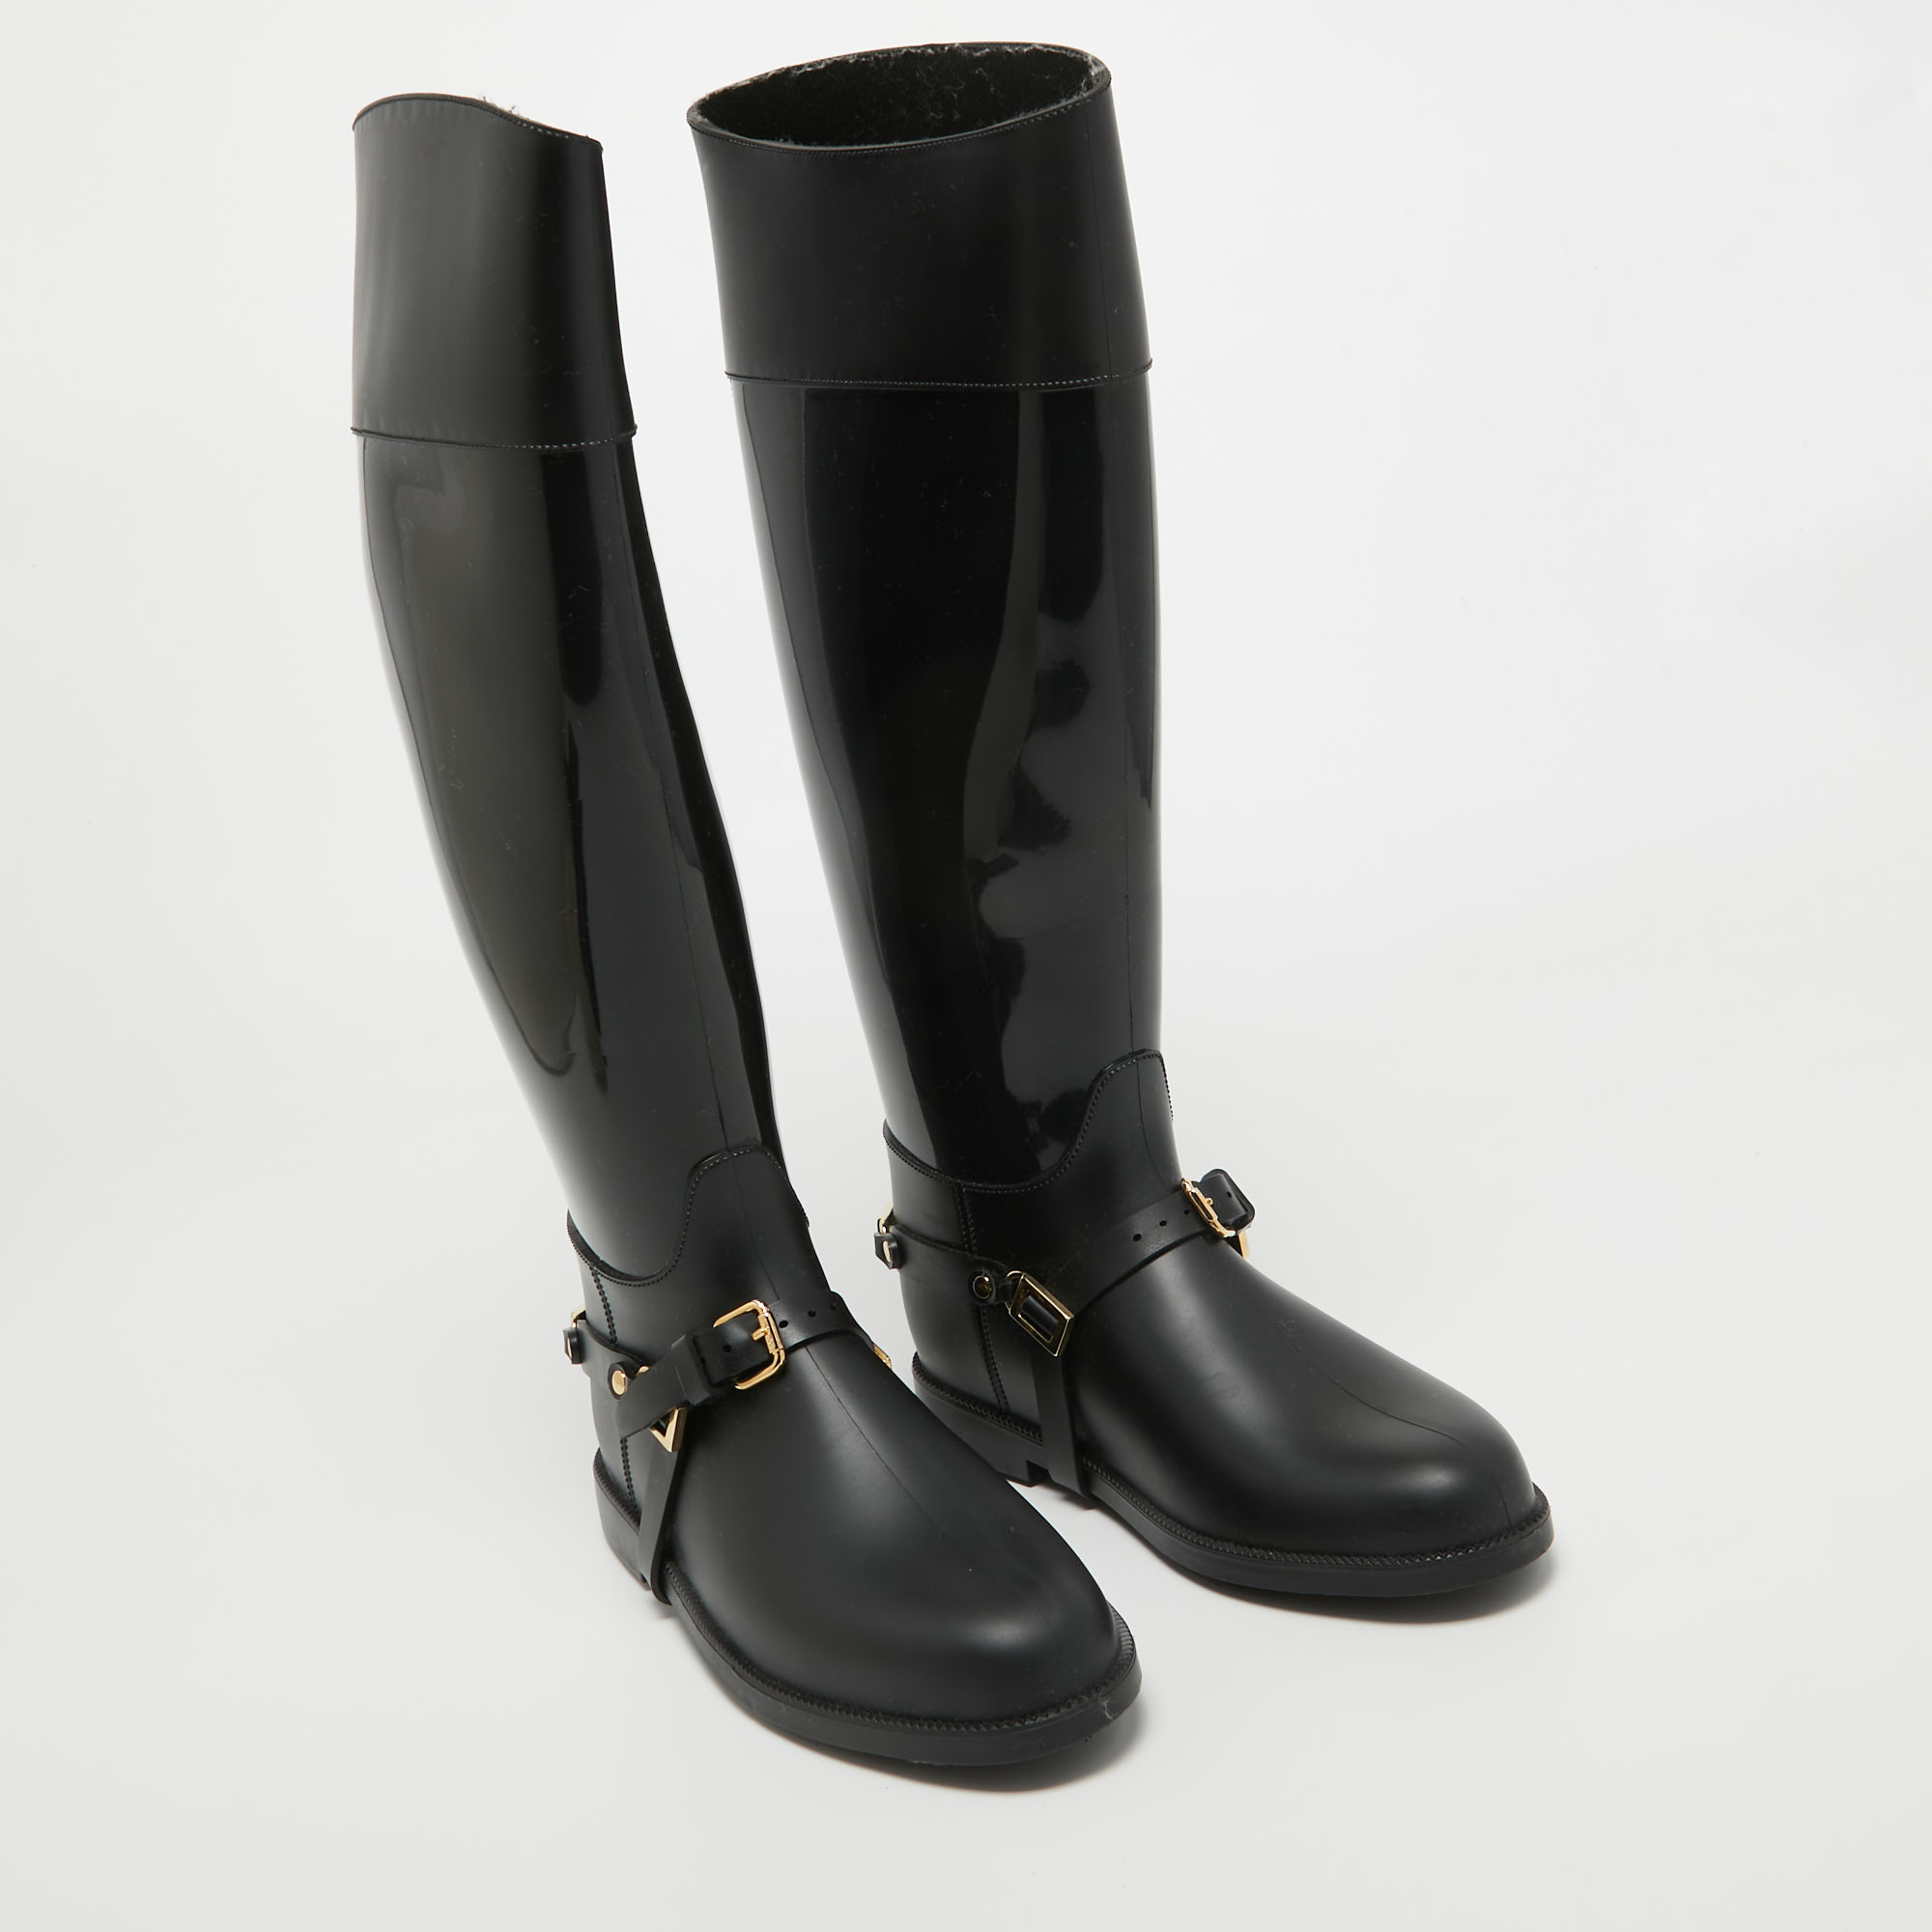 Jimmy Choo Black Rubber Rain Boots Size 36